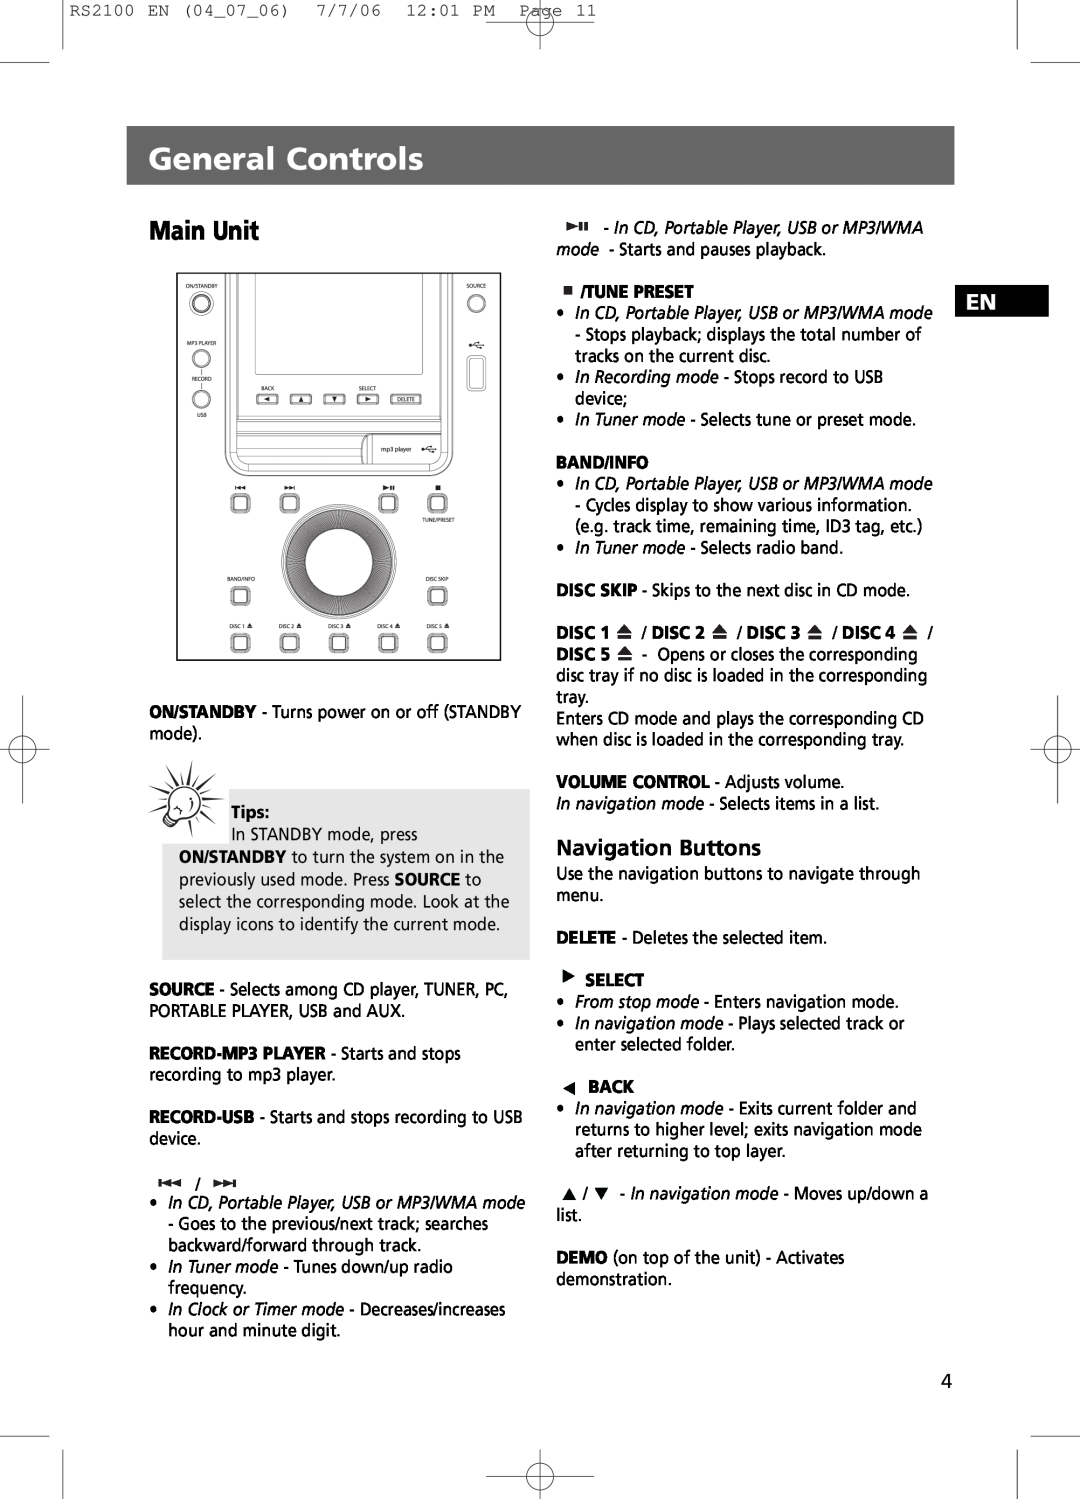 RCA user manual General Controls, Main Unit, RS2100 EN 04 07 06 7/7/06 12 01 PM Page, Tune Preset 